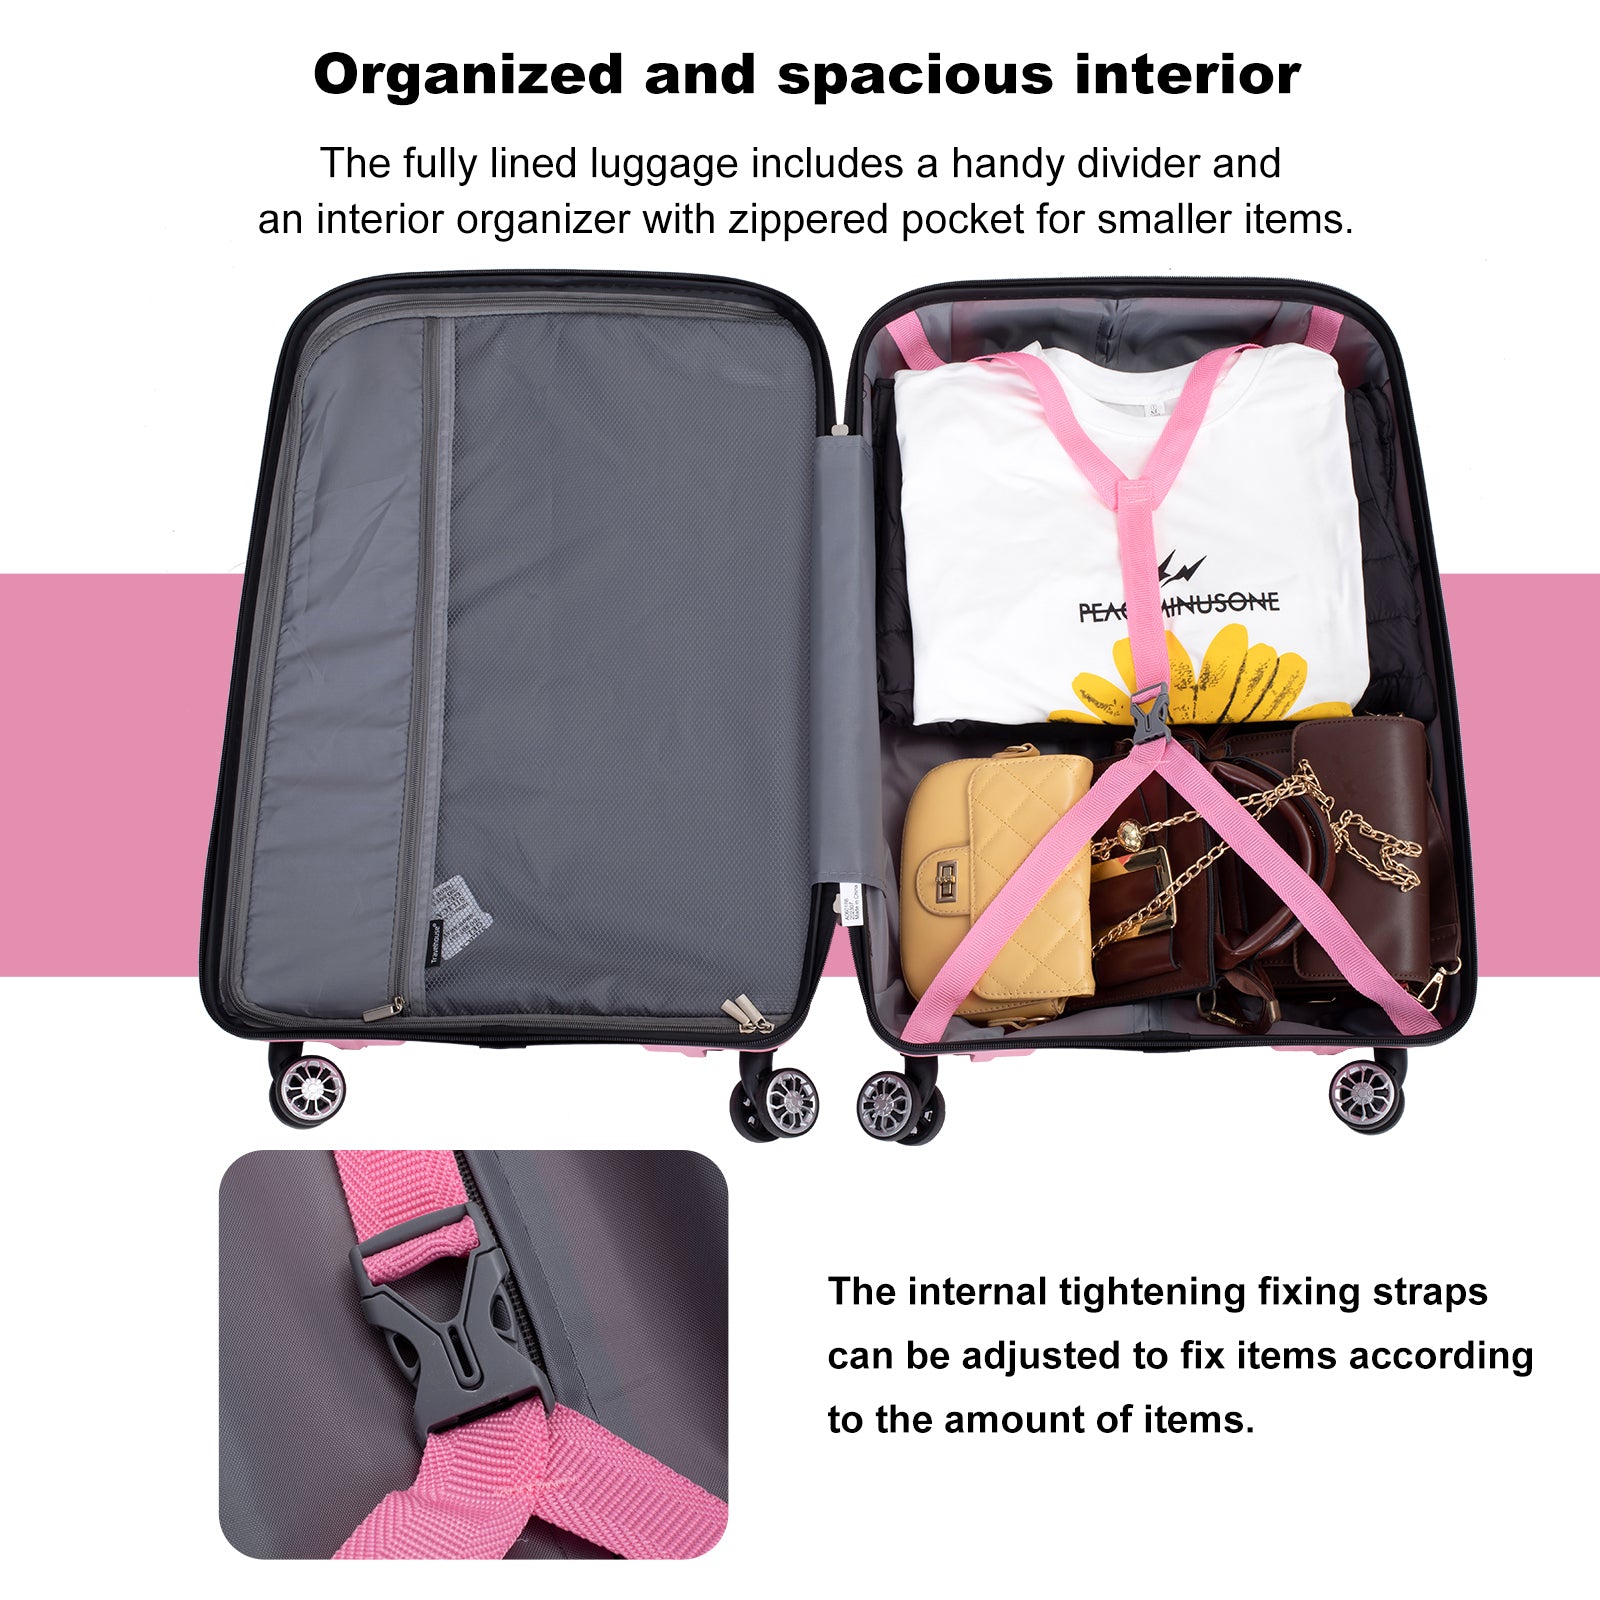 Hardshell Suitcase Spinner Wheels PP Luggage Sets pink-polypropylene